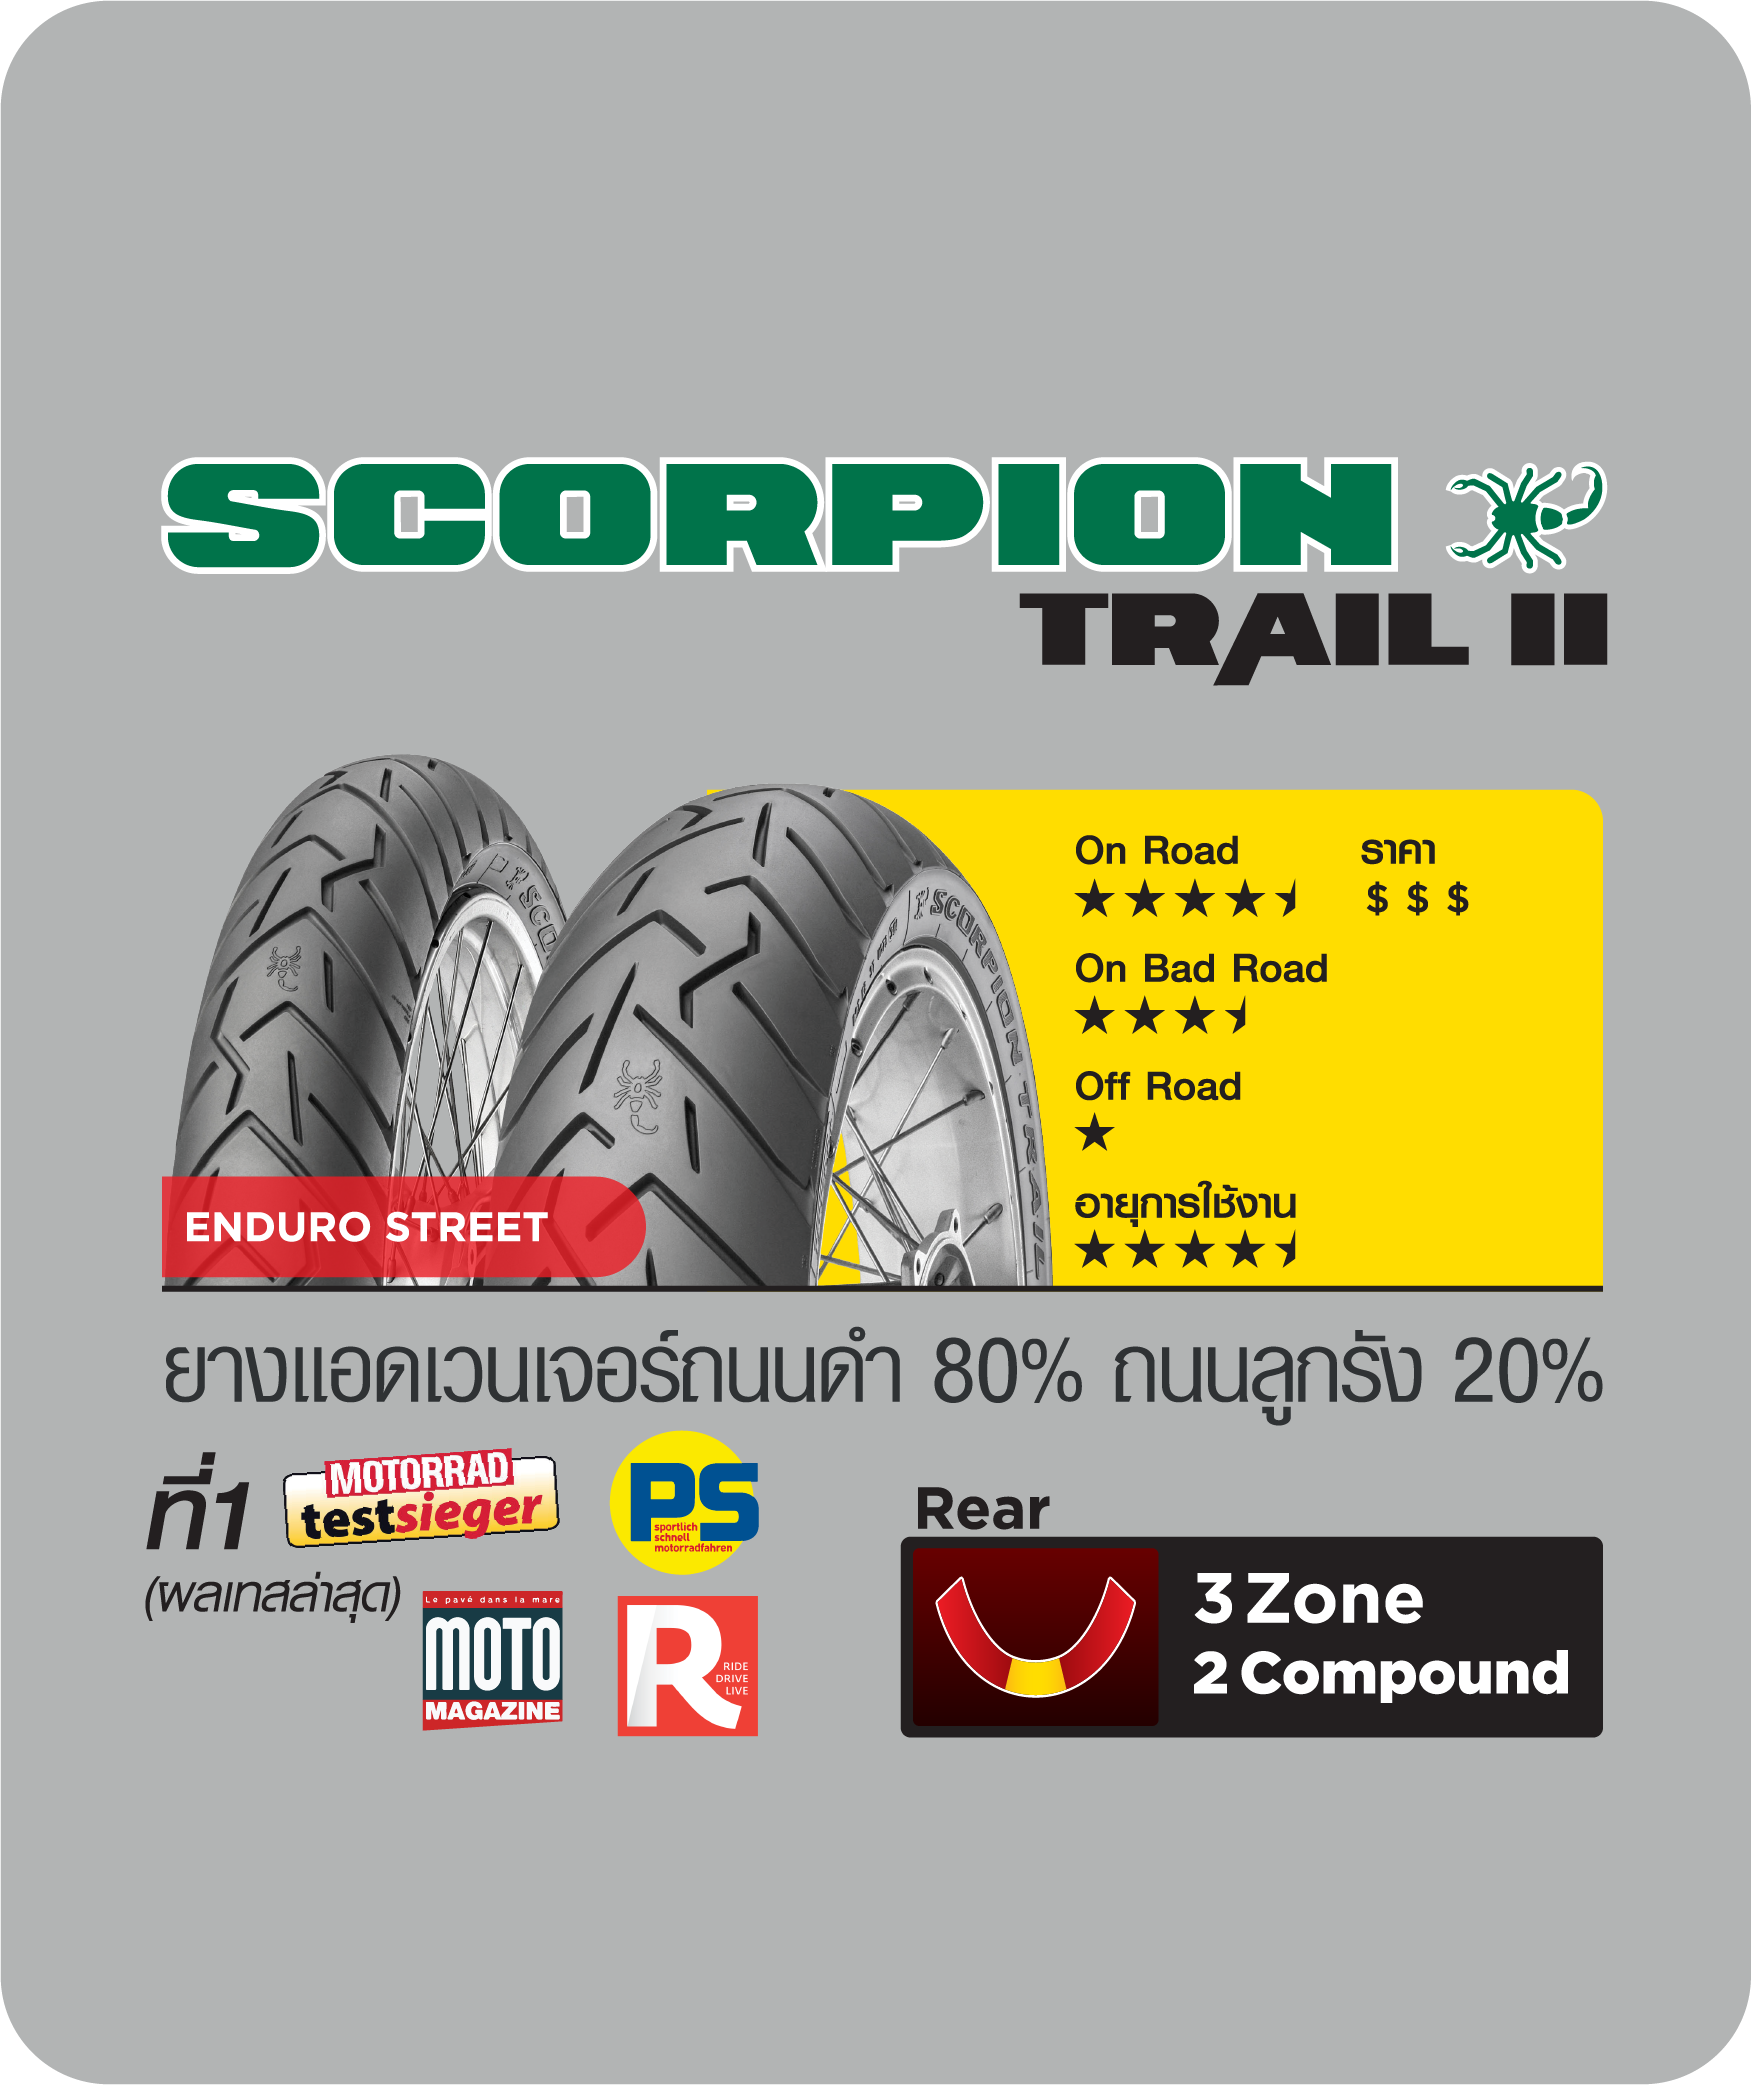 scorpion trail ii